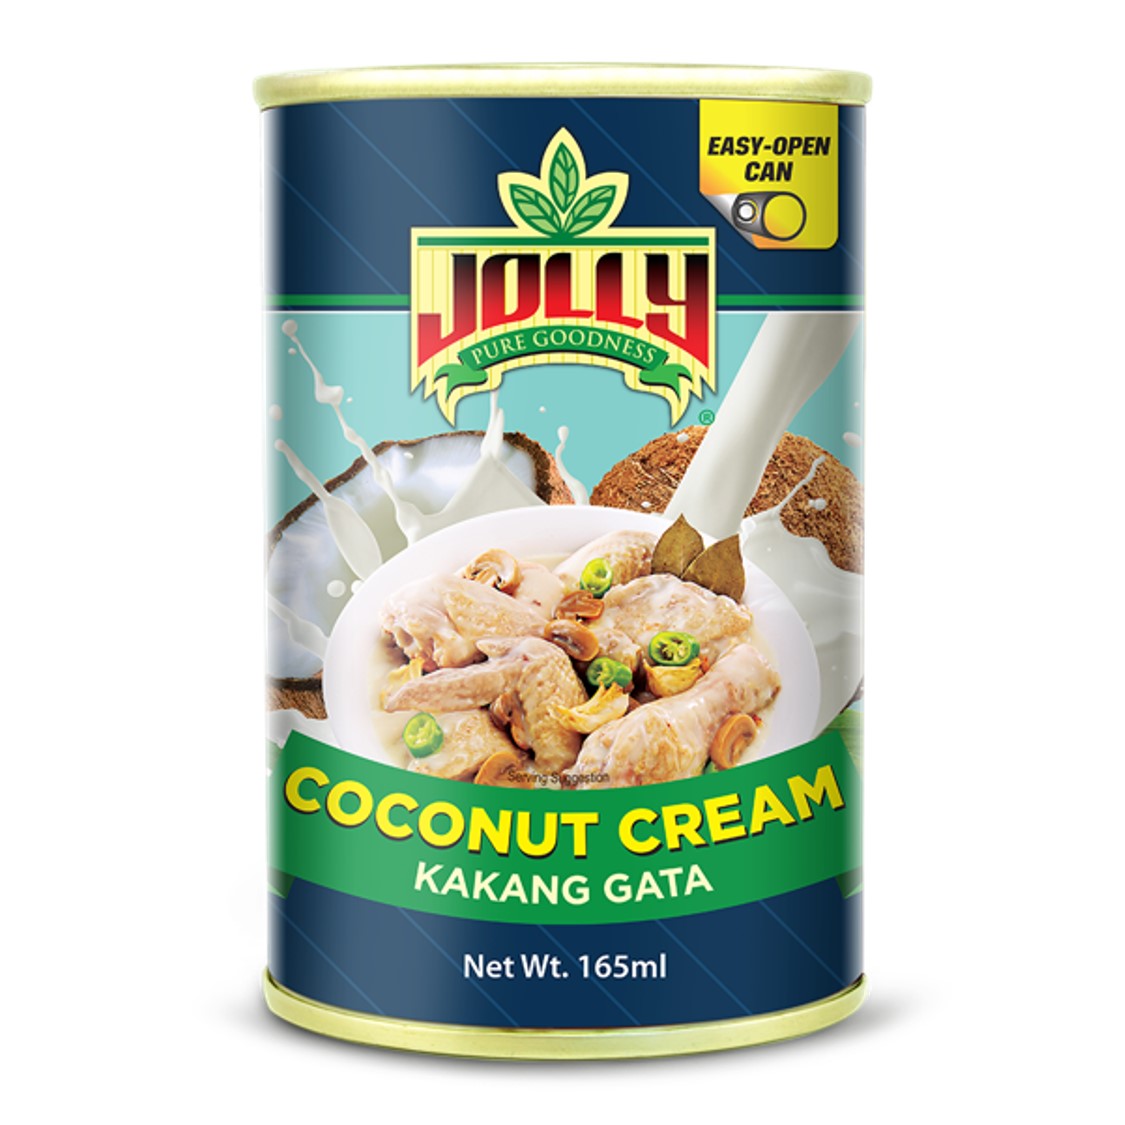 Jolly Coconut Cream (Kakang Gata) (165ml)